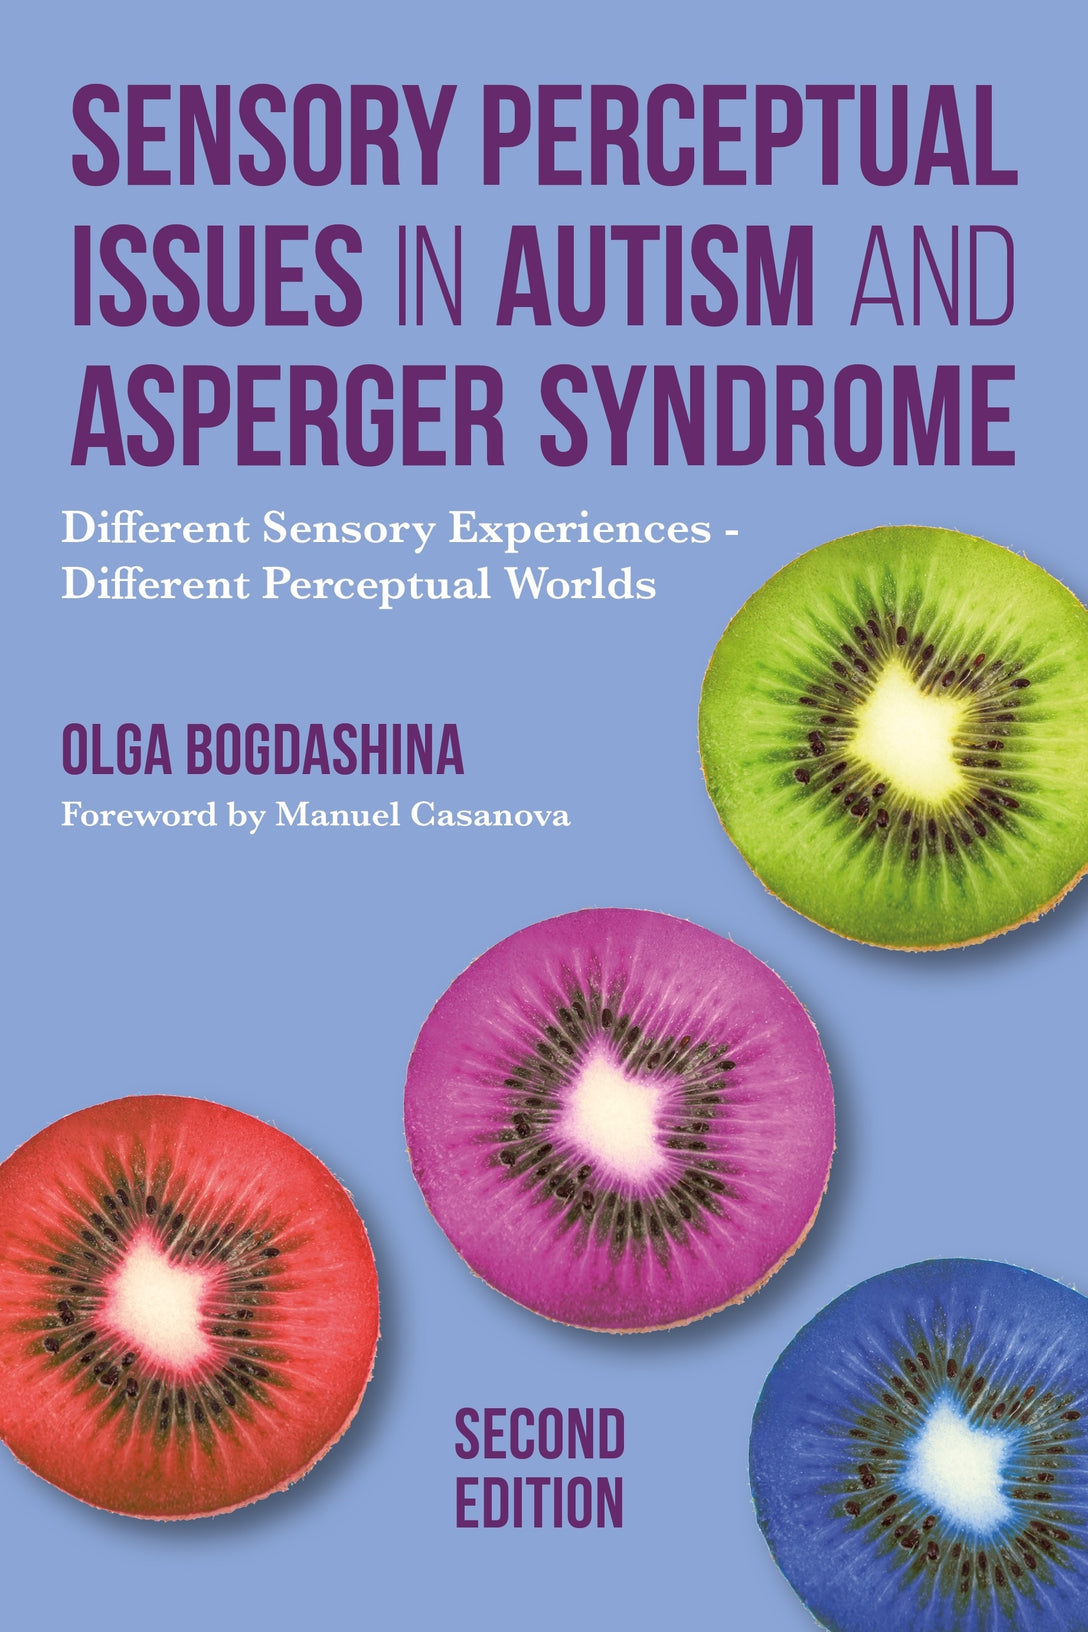 Sensory Perceptual Issues in Autism and Asperger Syndrome, Second Edition by Manuel Casanova, Olga Bogdashina